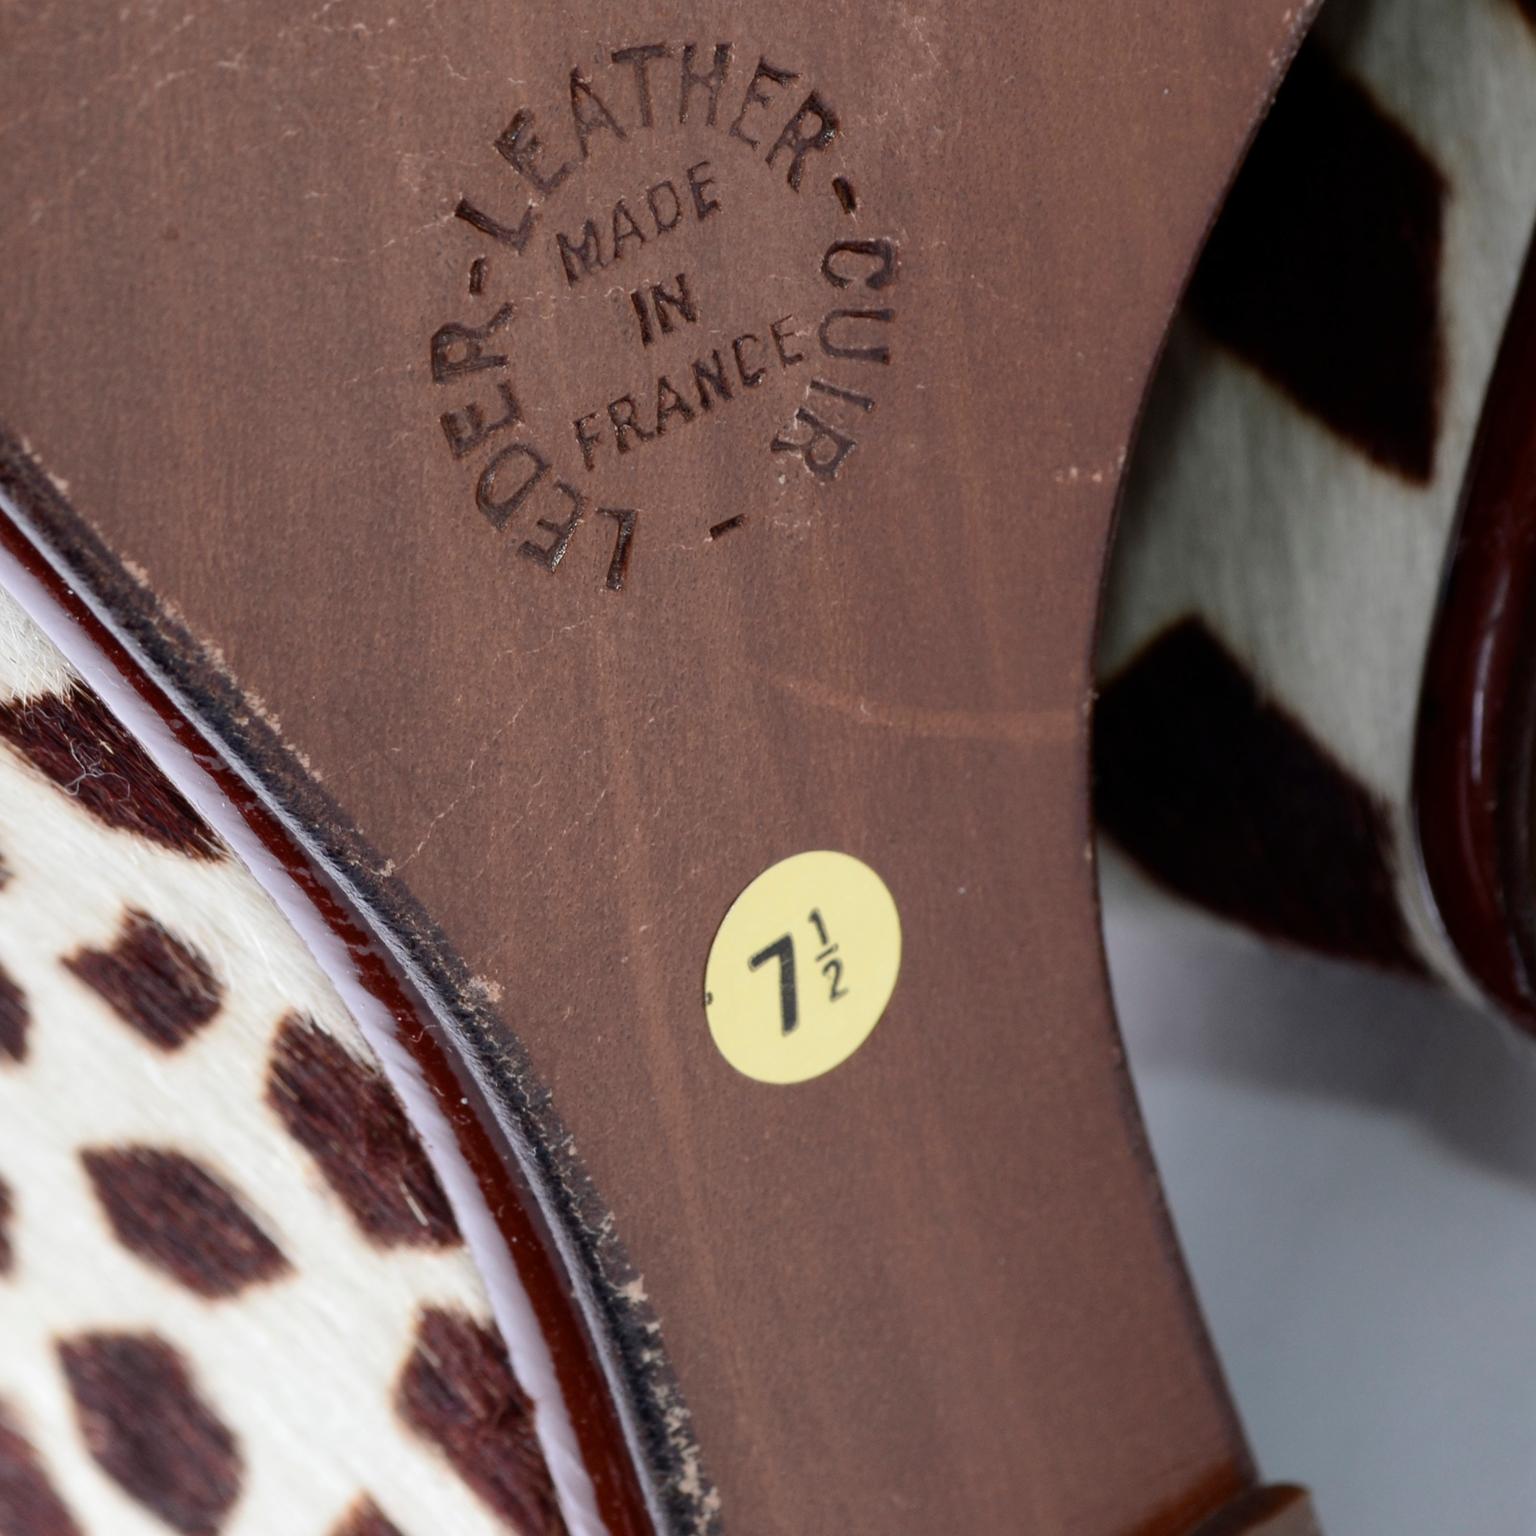 New Maud Frizon Paris Wedge Heel Open Toe Shoes in Pony Fur Giraffe Print 7.5 4